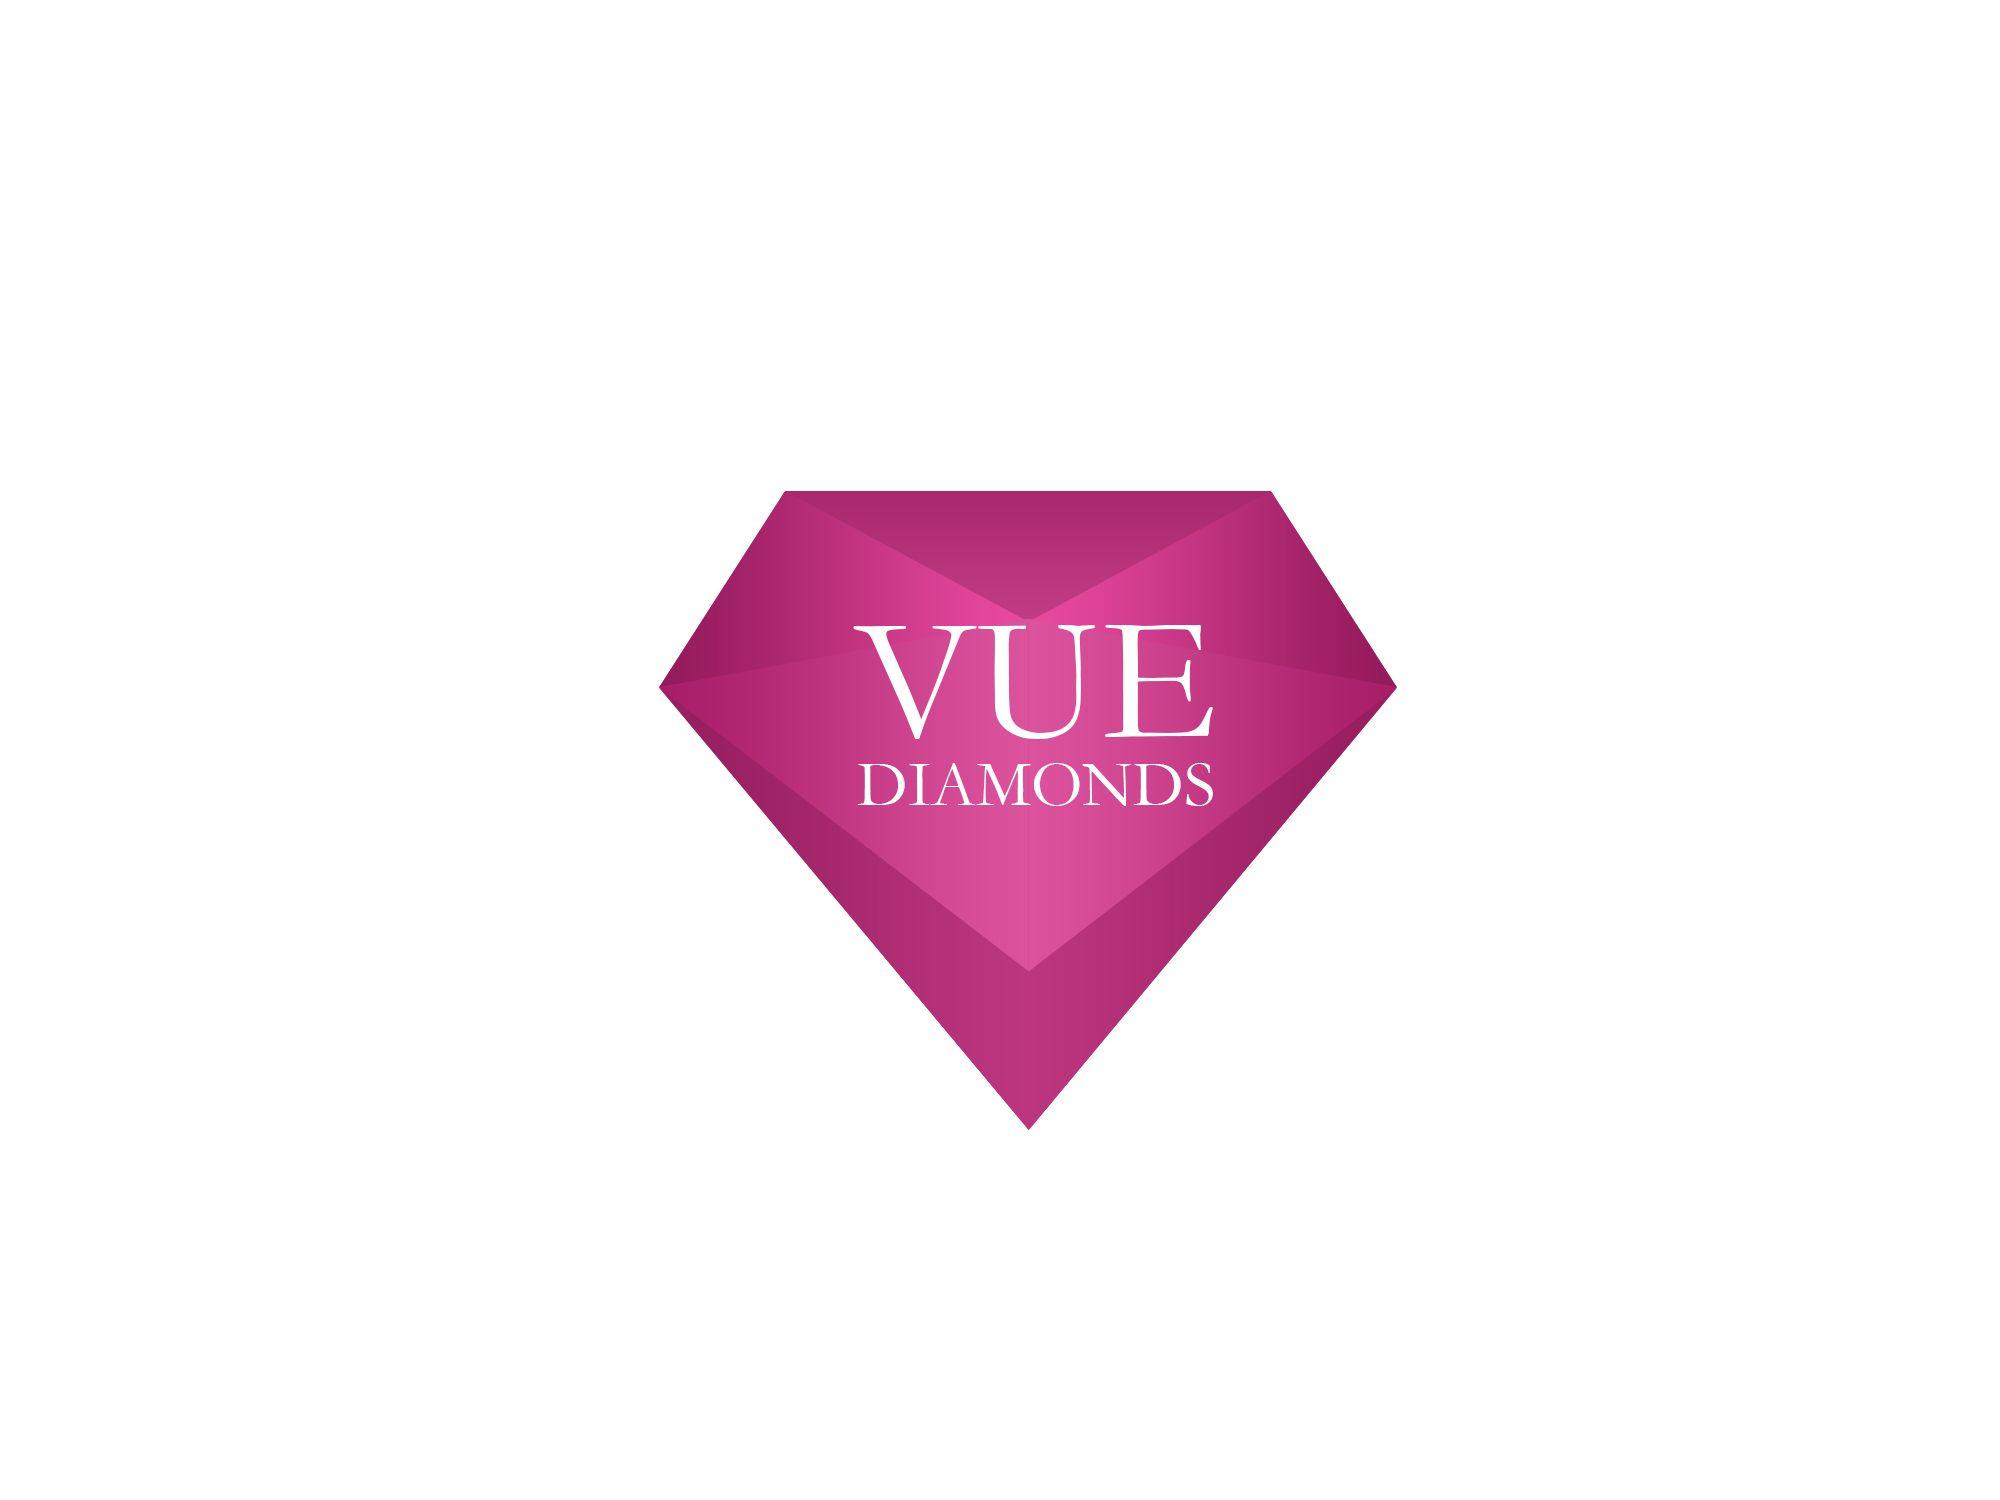 Purple Diamonds Logo - VUE Diamond Logo | Logos | Pinterest | Diamond logo and Logos